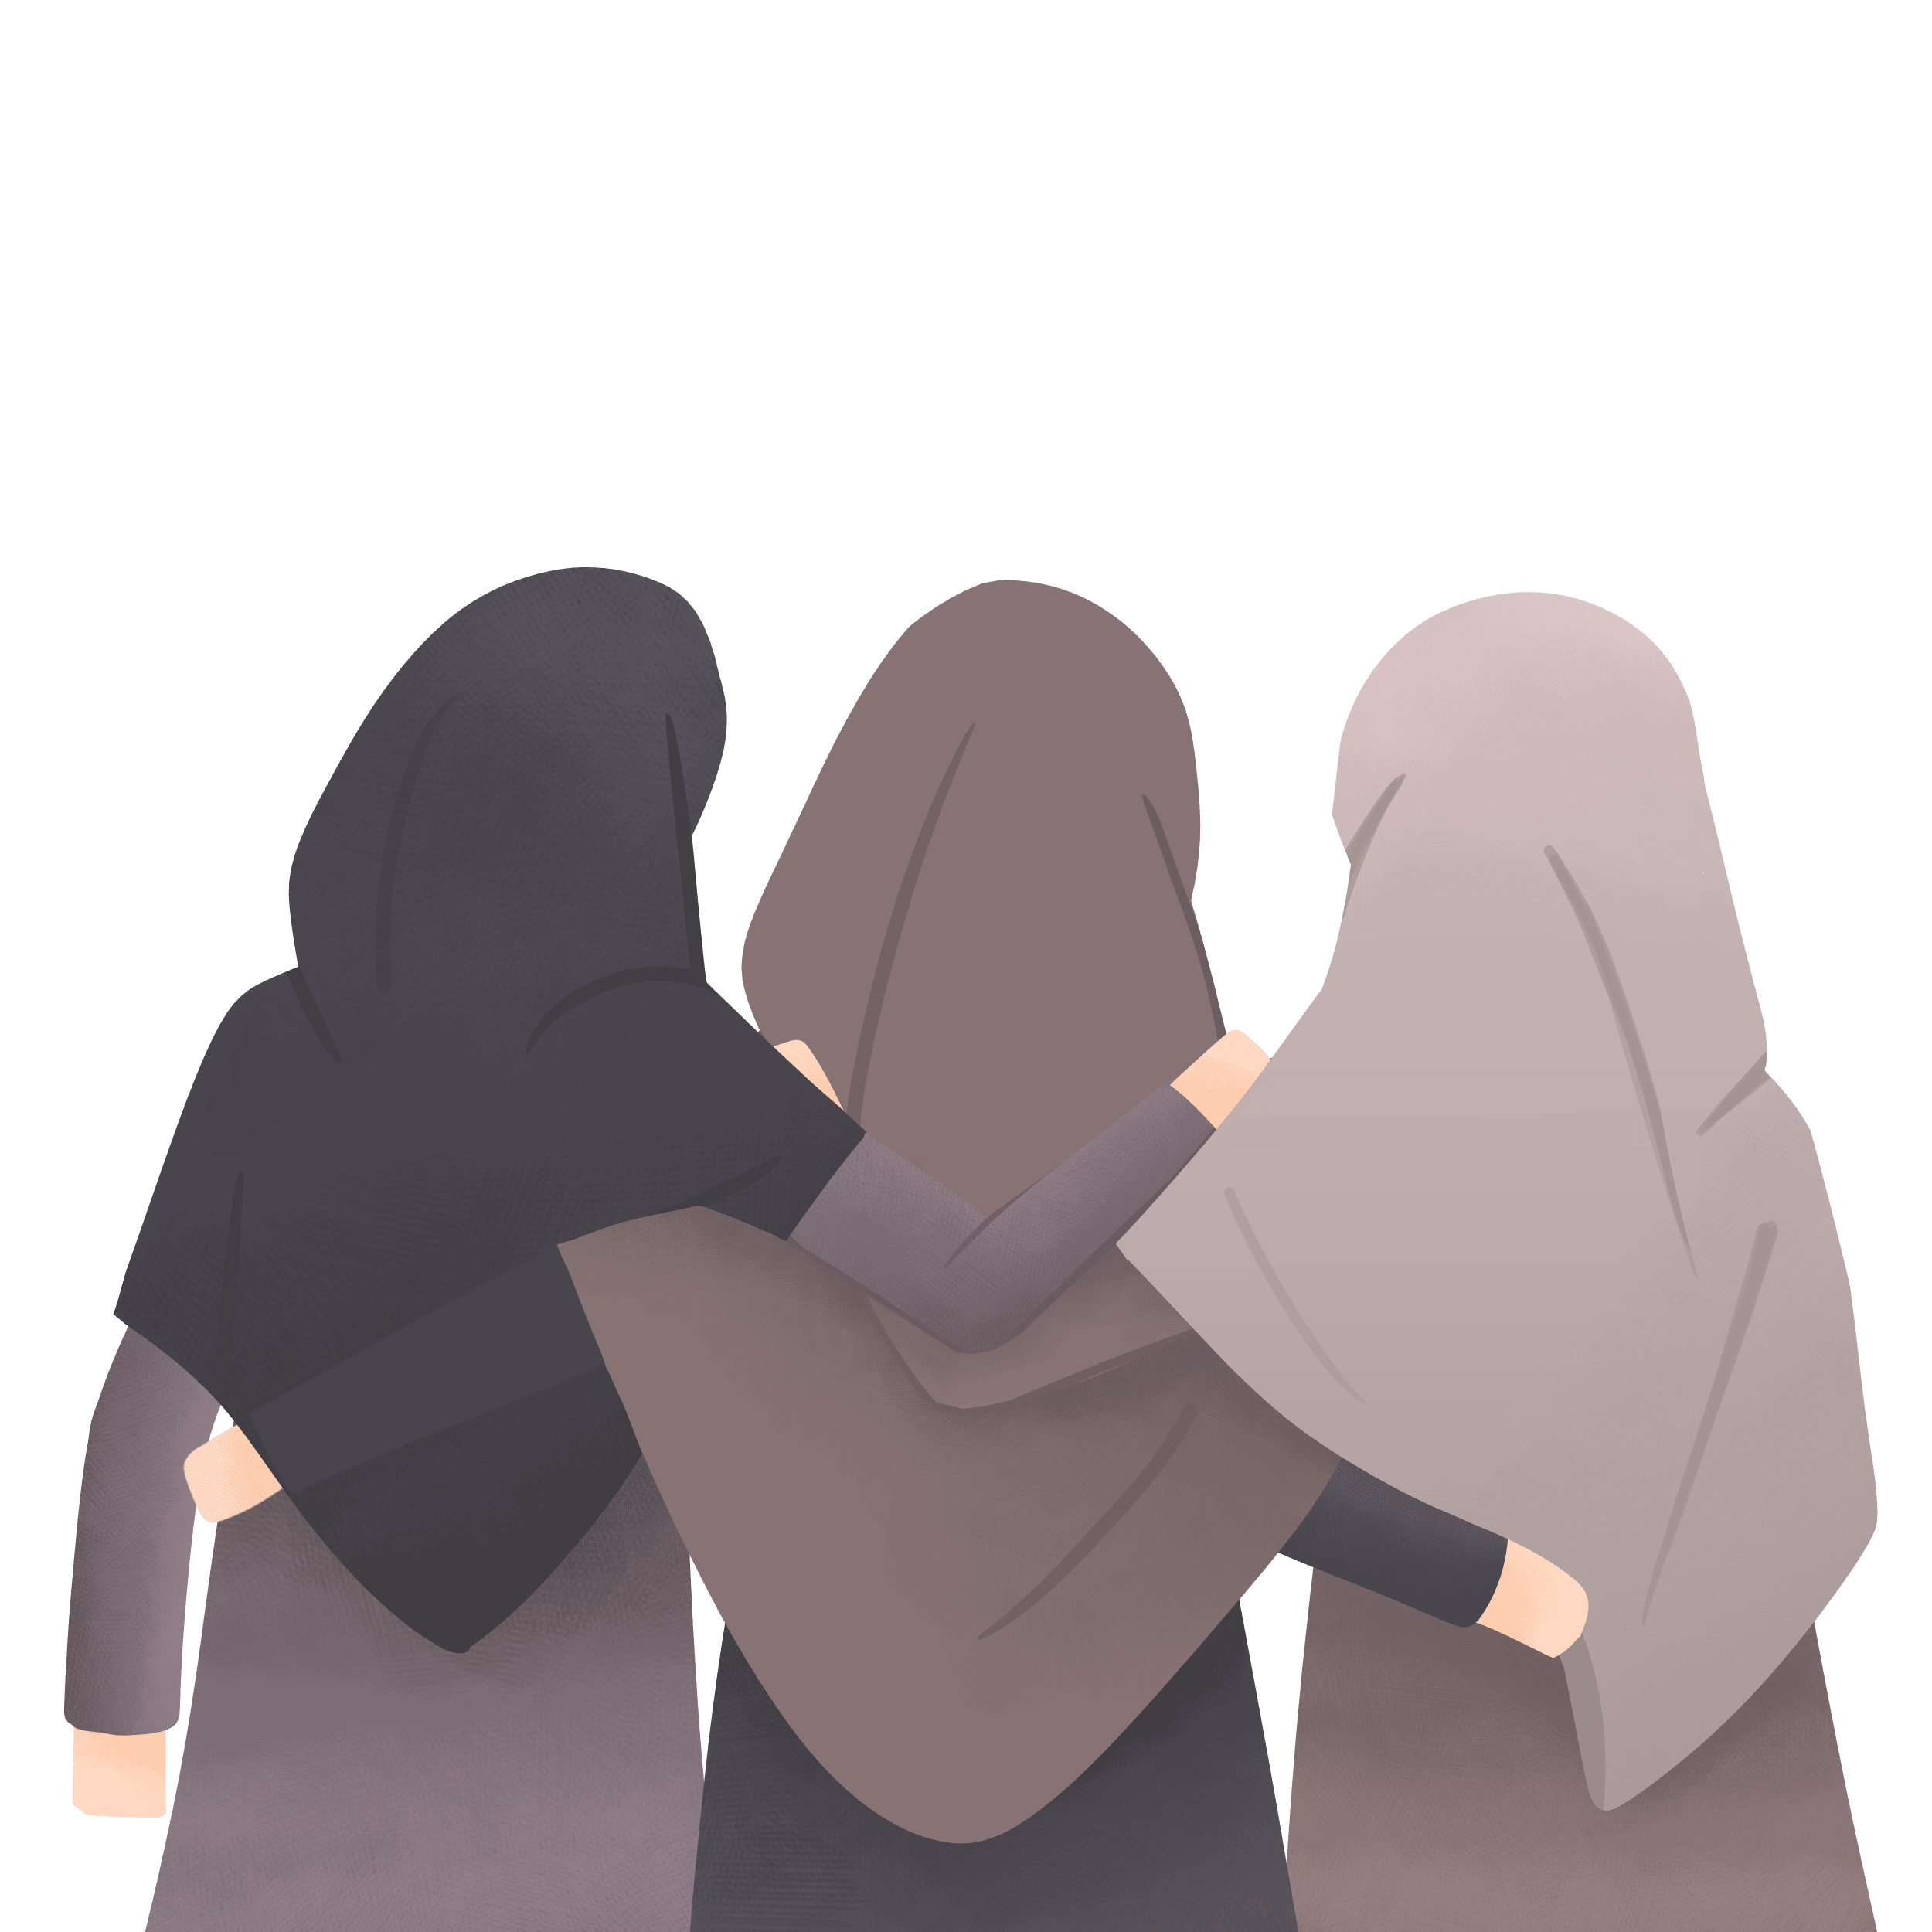 Kartun sahabat muslimah